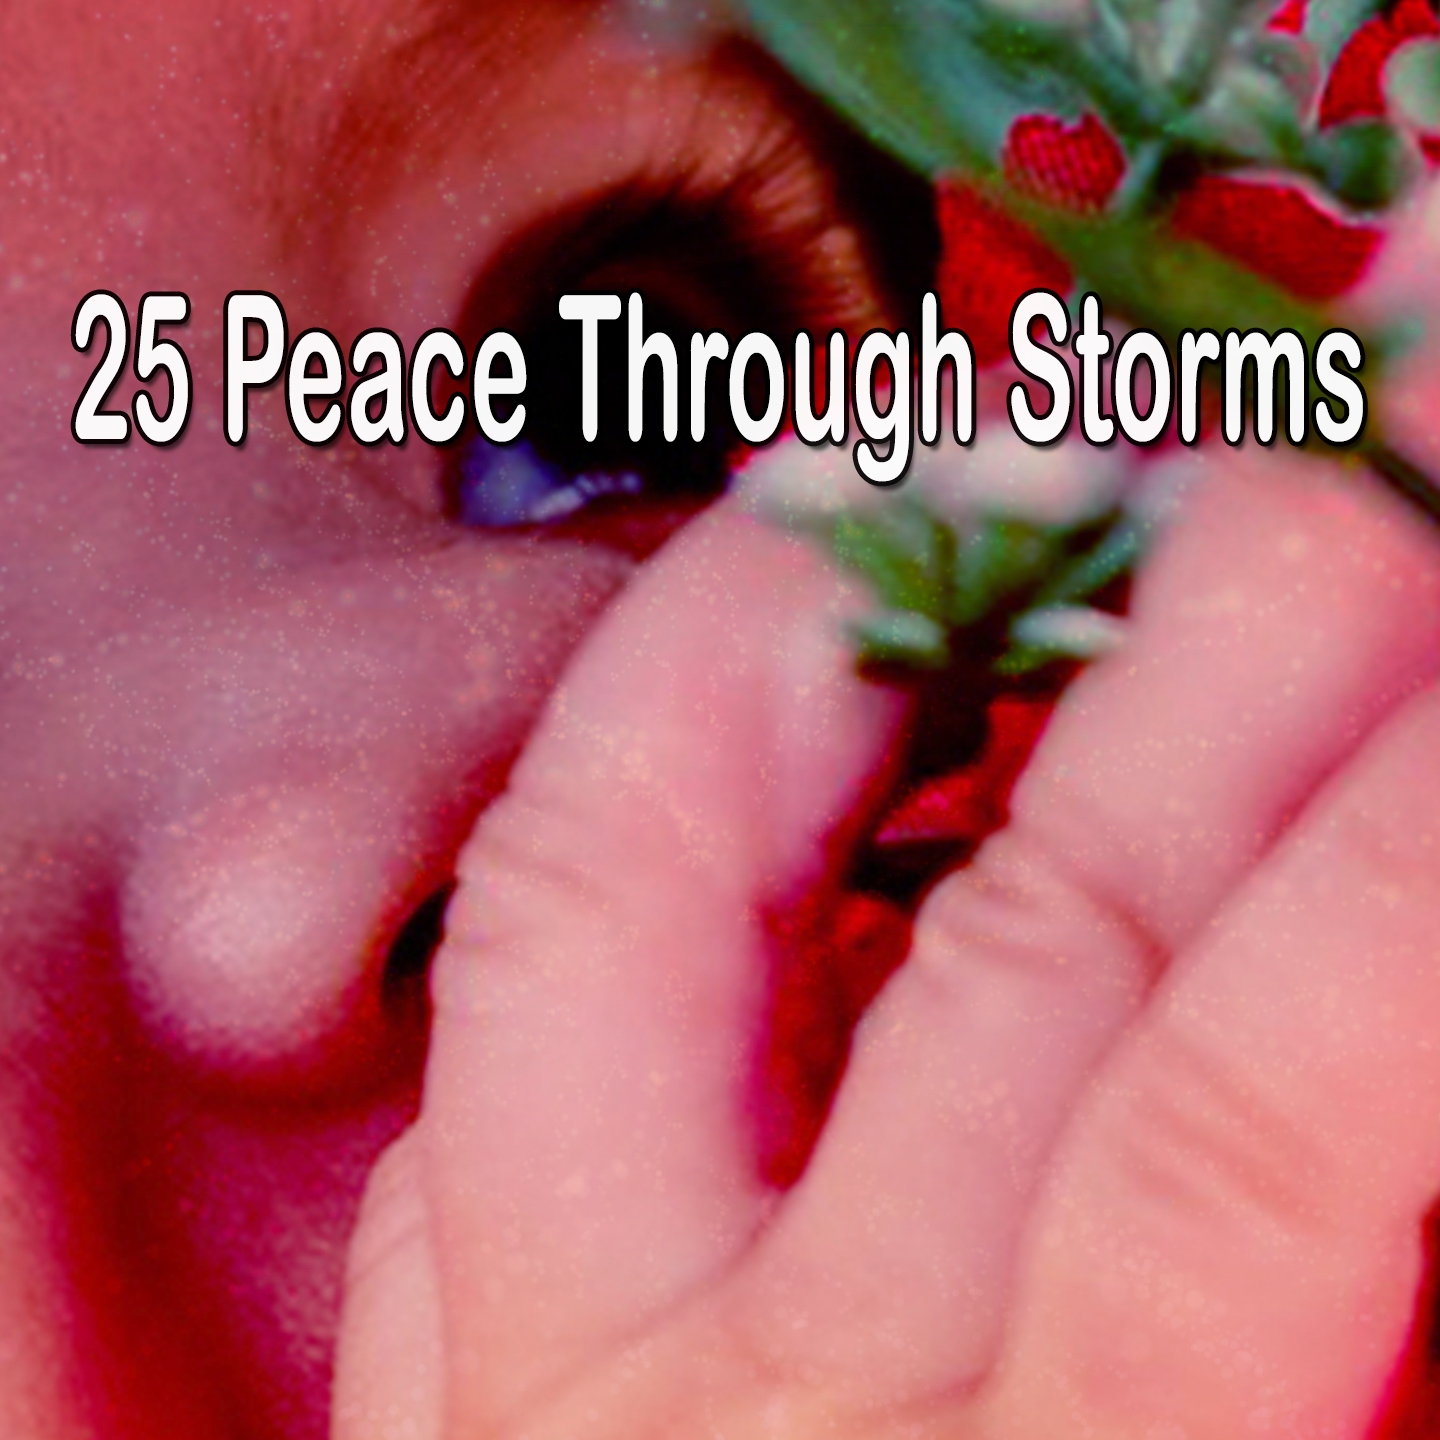 25 Peace Through Storms